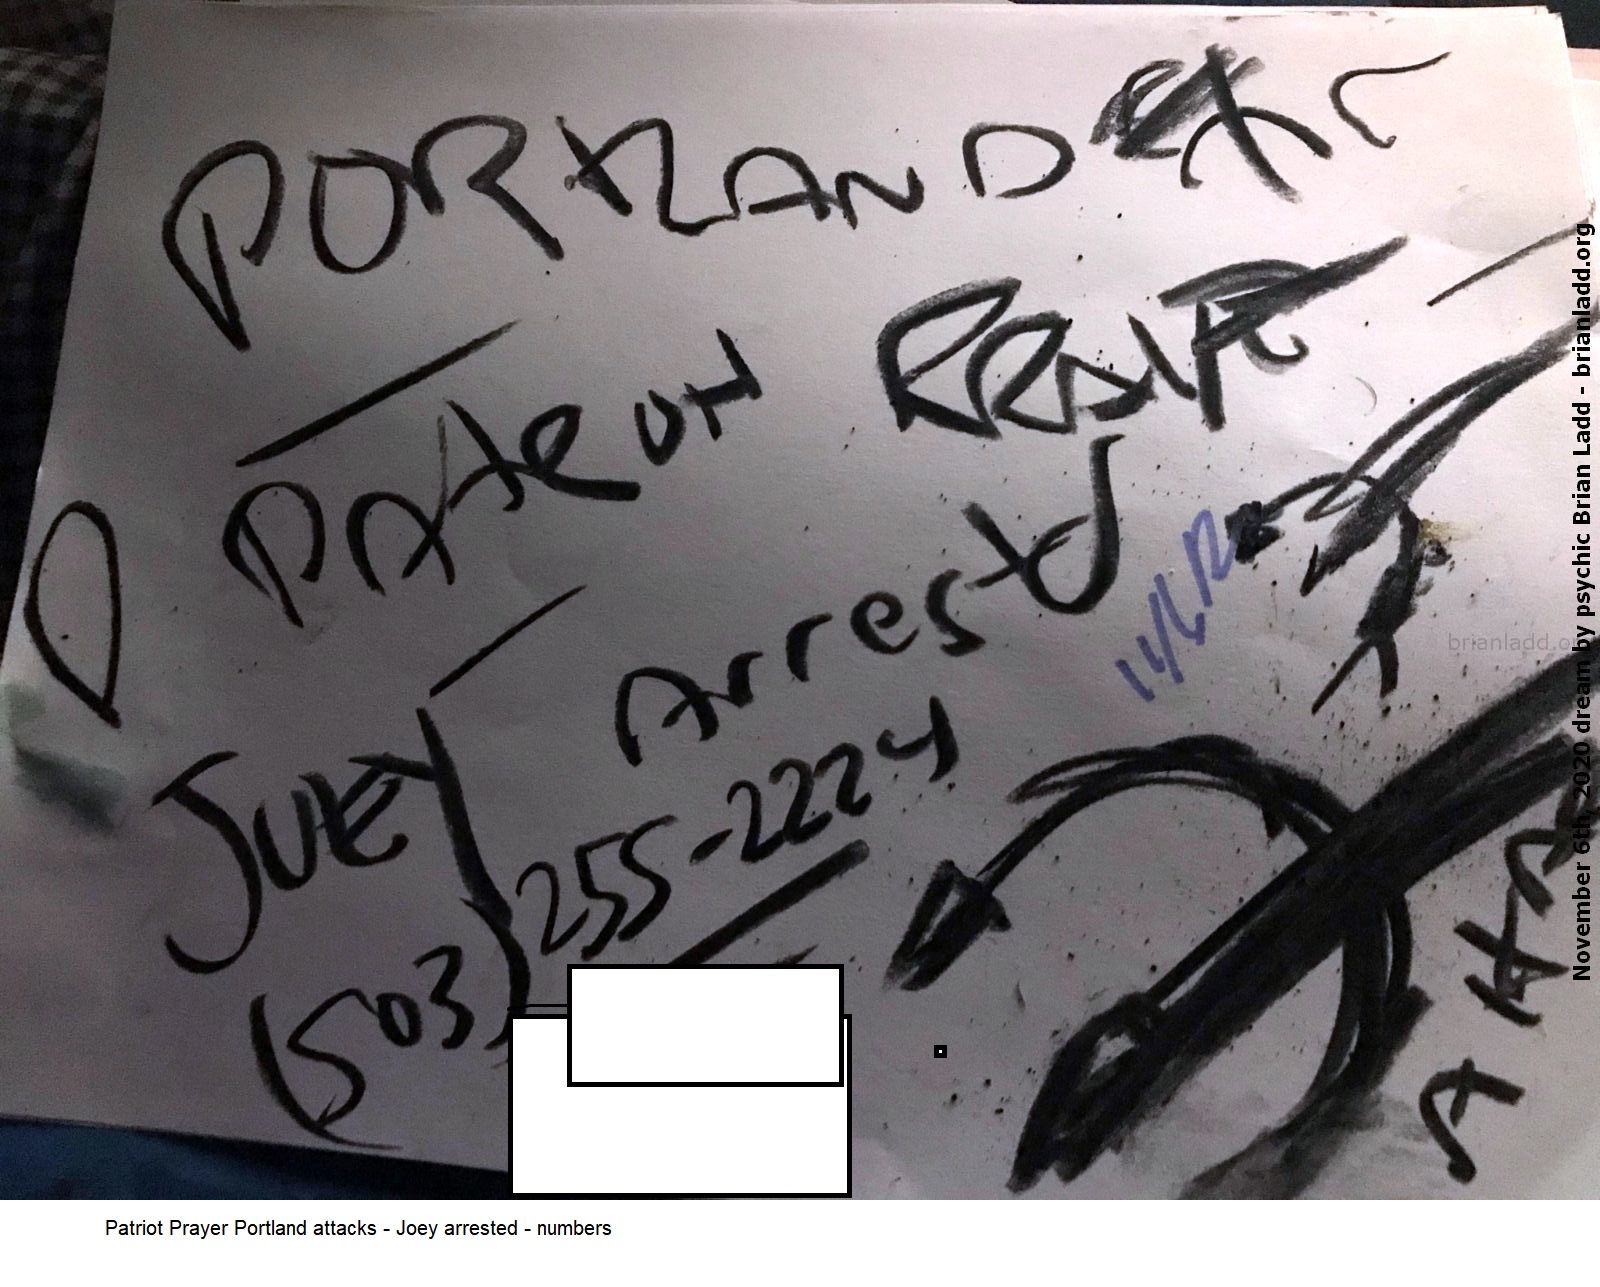 14000 6 November 2020 3 - Patriot Prayer Portland Attacks - Joey Arrested - Numbers....
Patriot Prayer Portland Attacks - Joey Arrested - Numbers.
